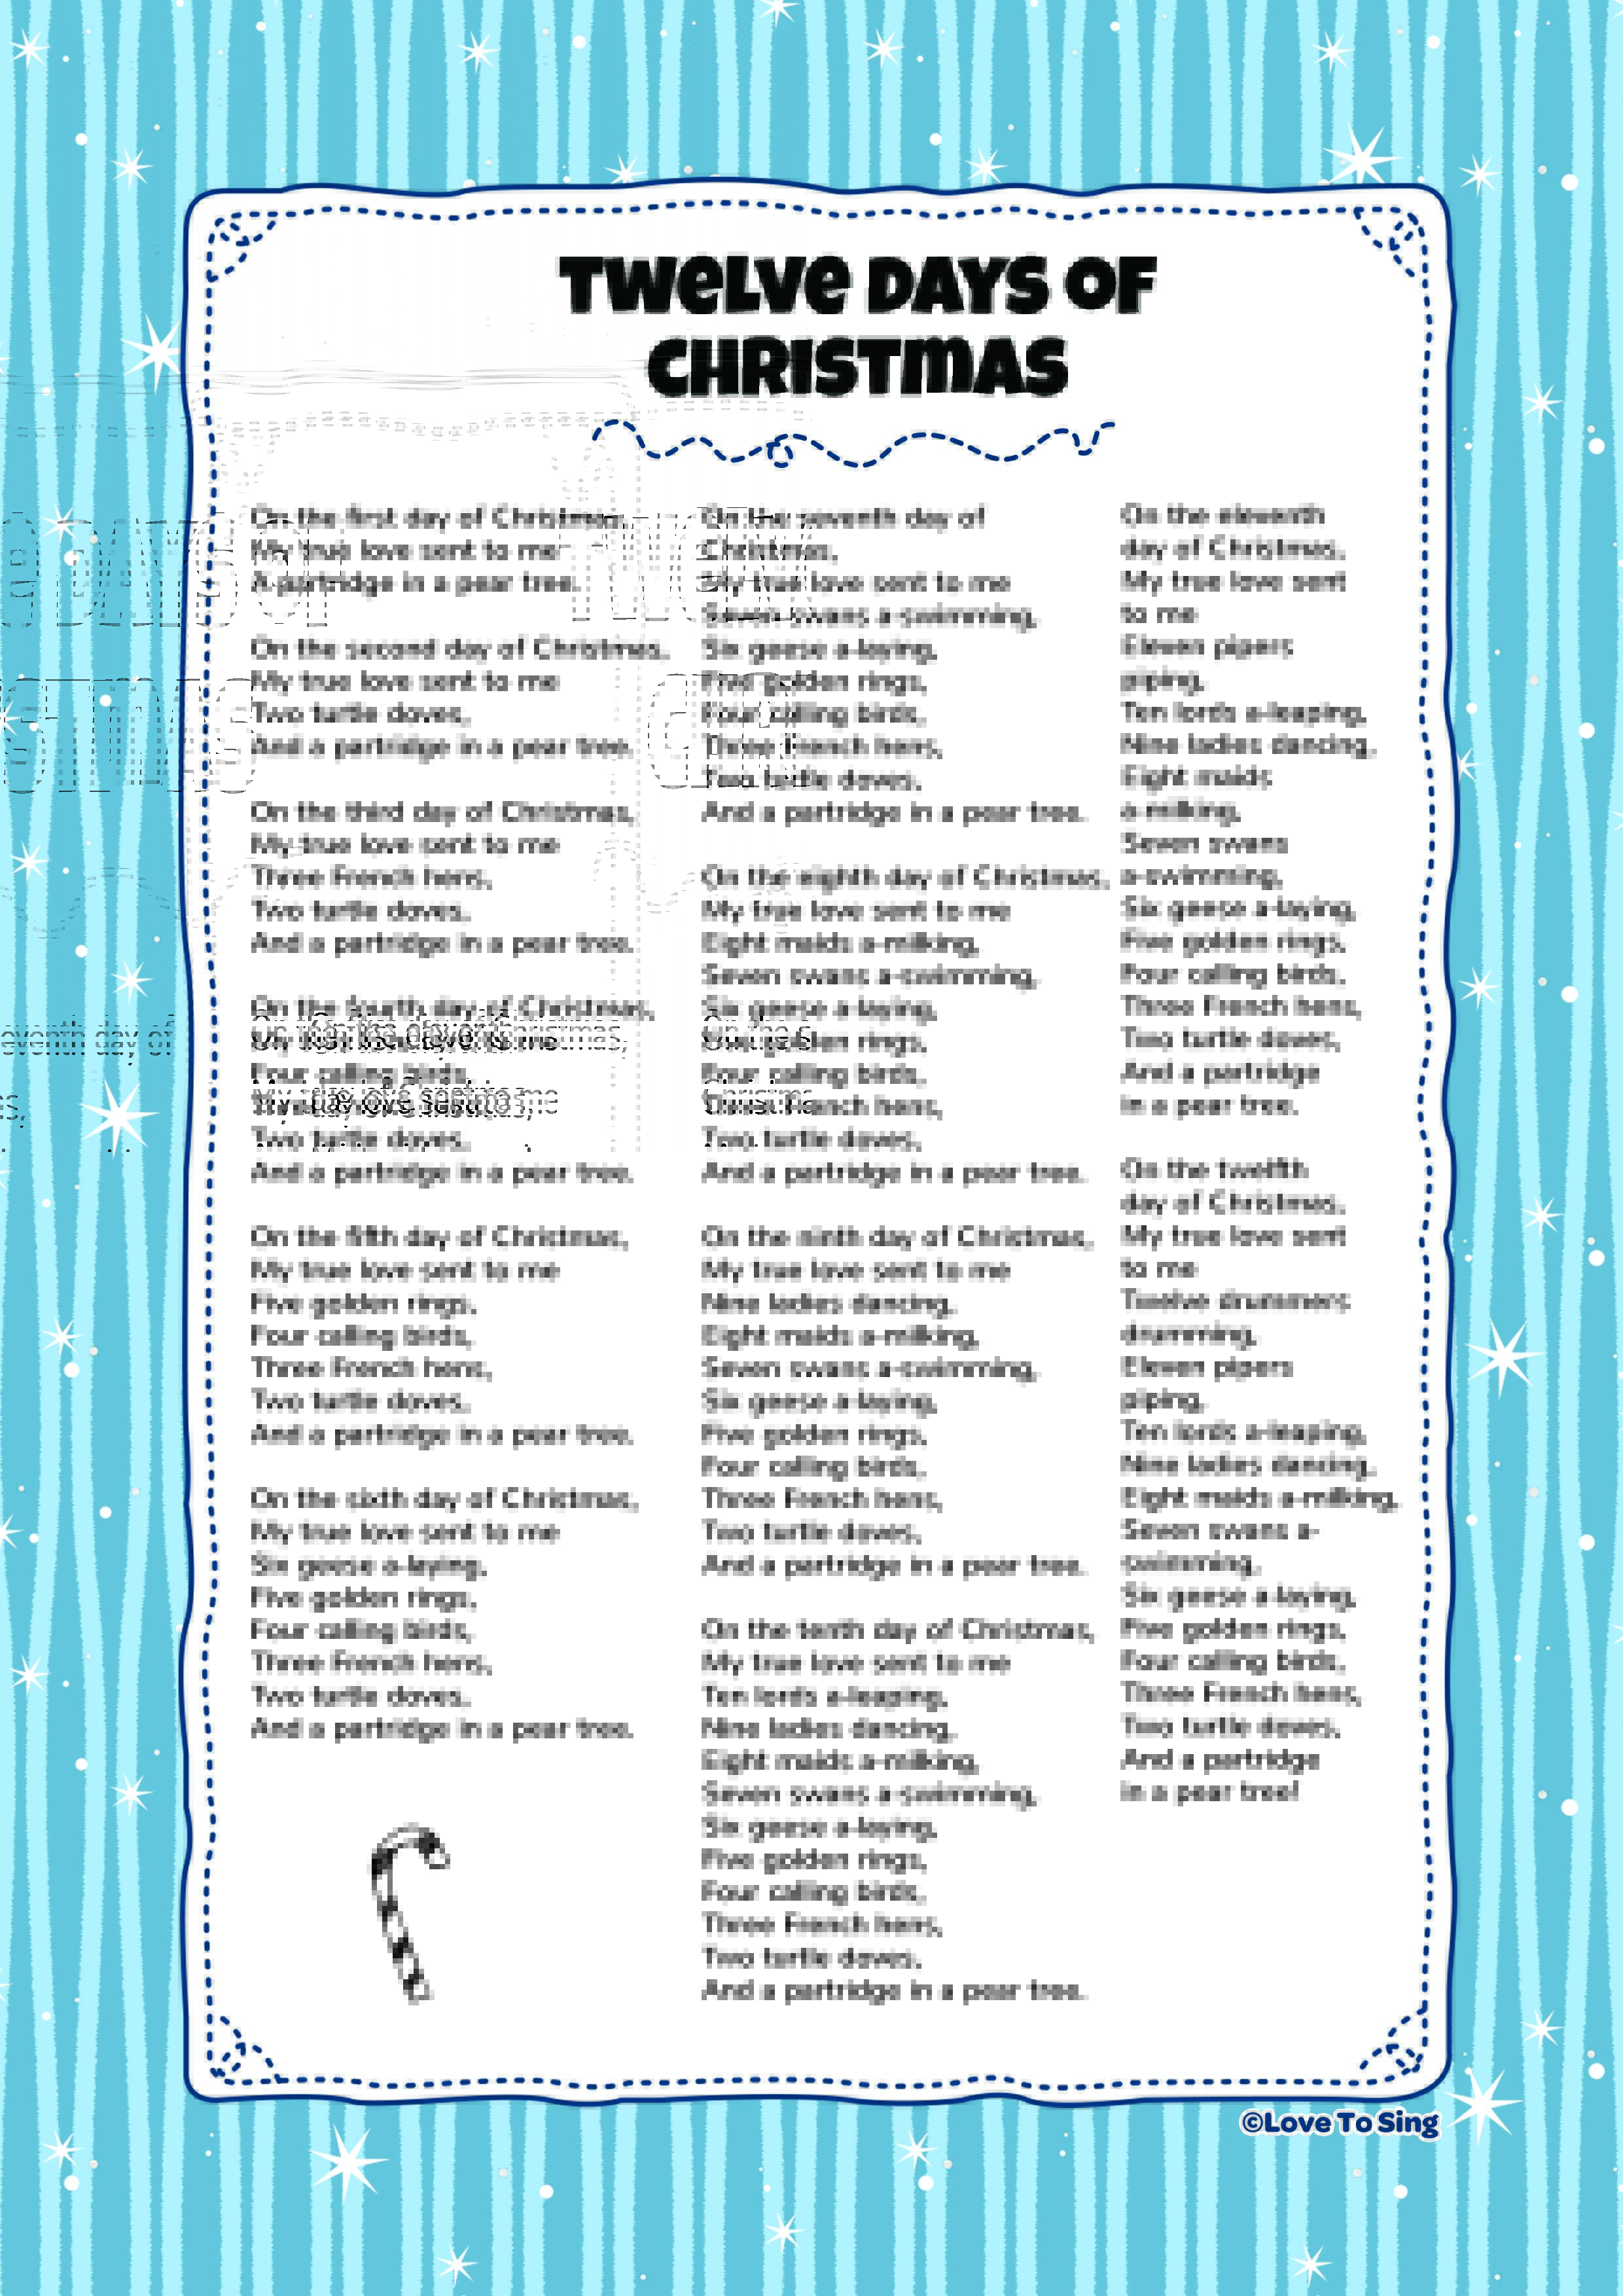 Twelve Days Of Christmas Kids Video Song with FREE Lyrics & Activities!